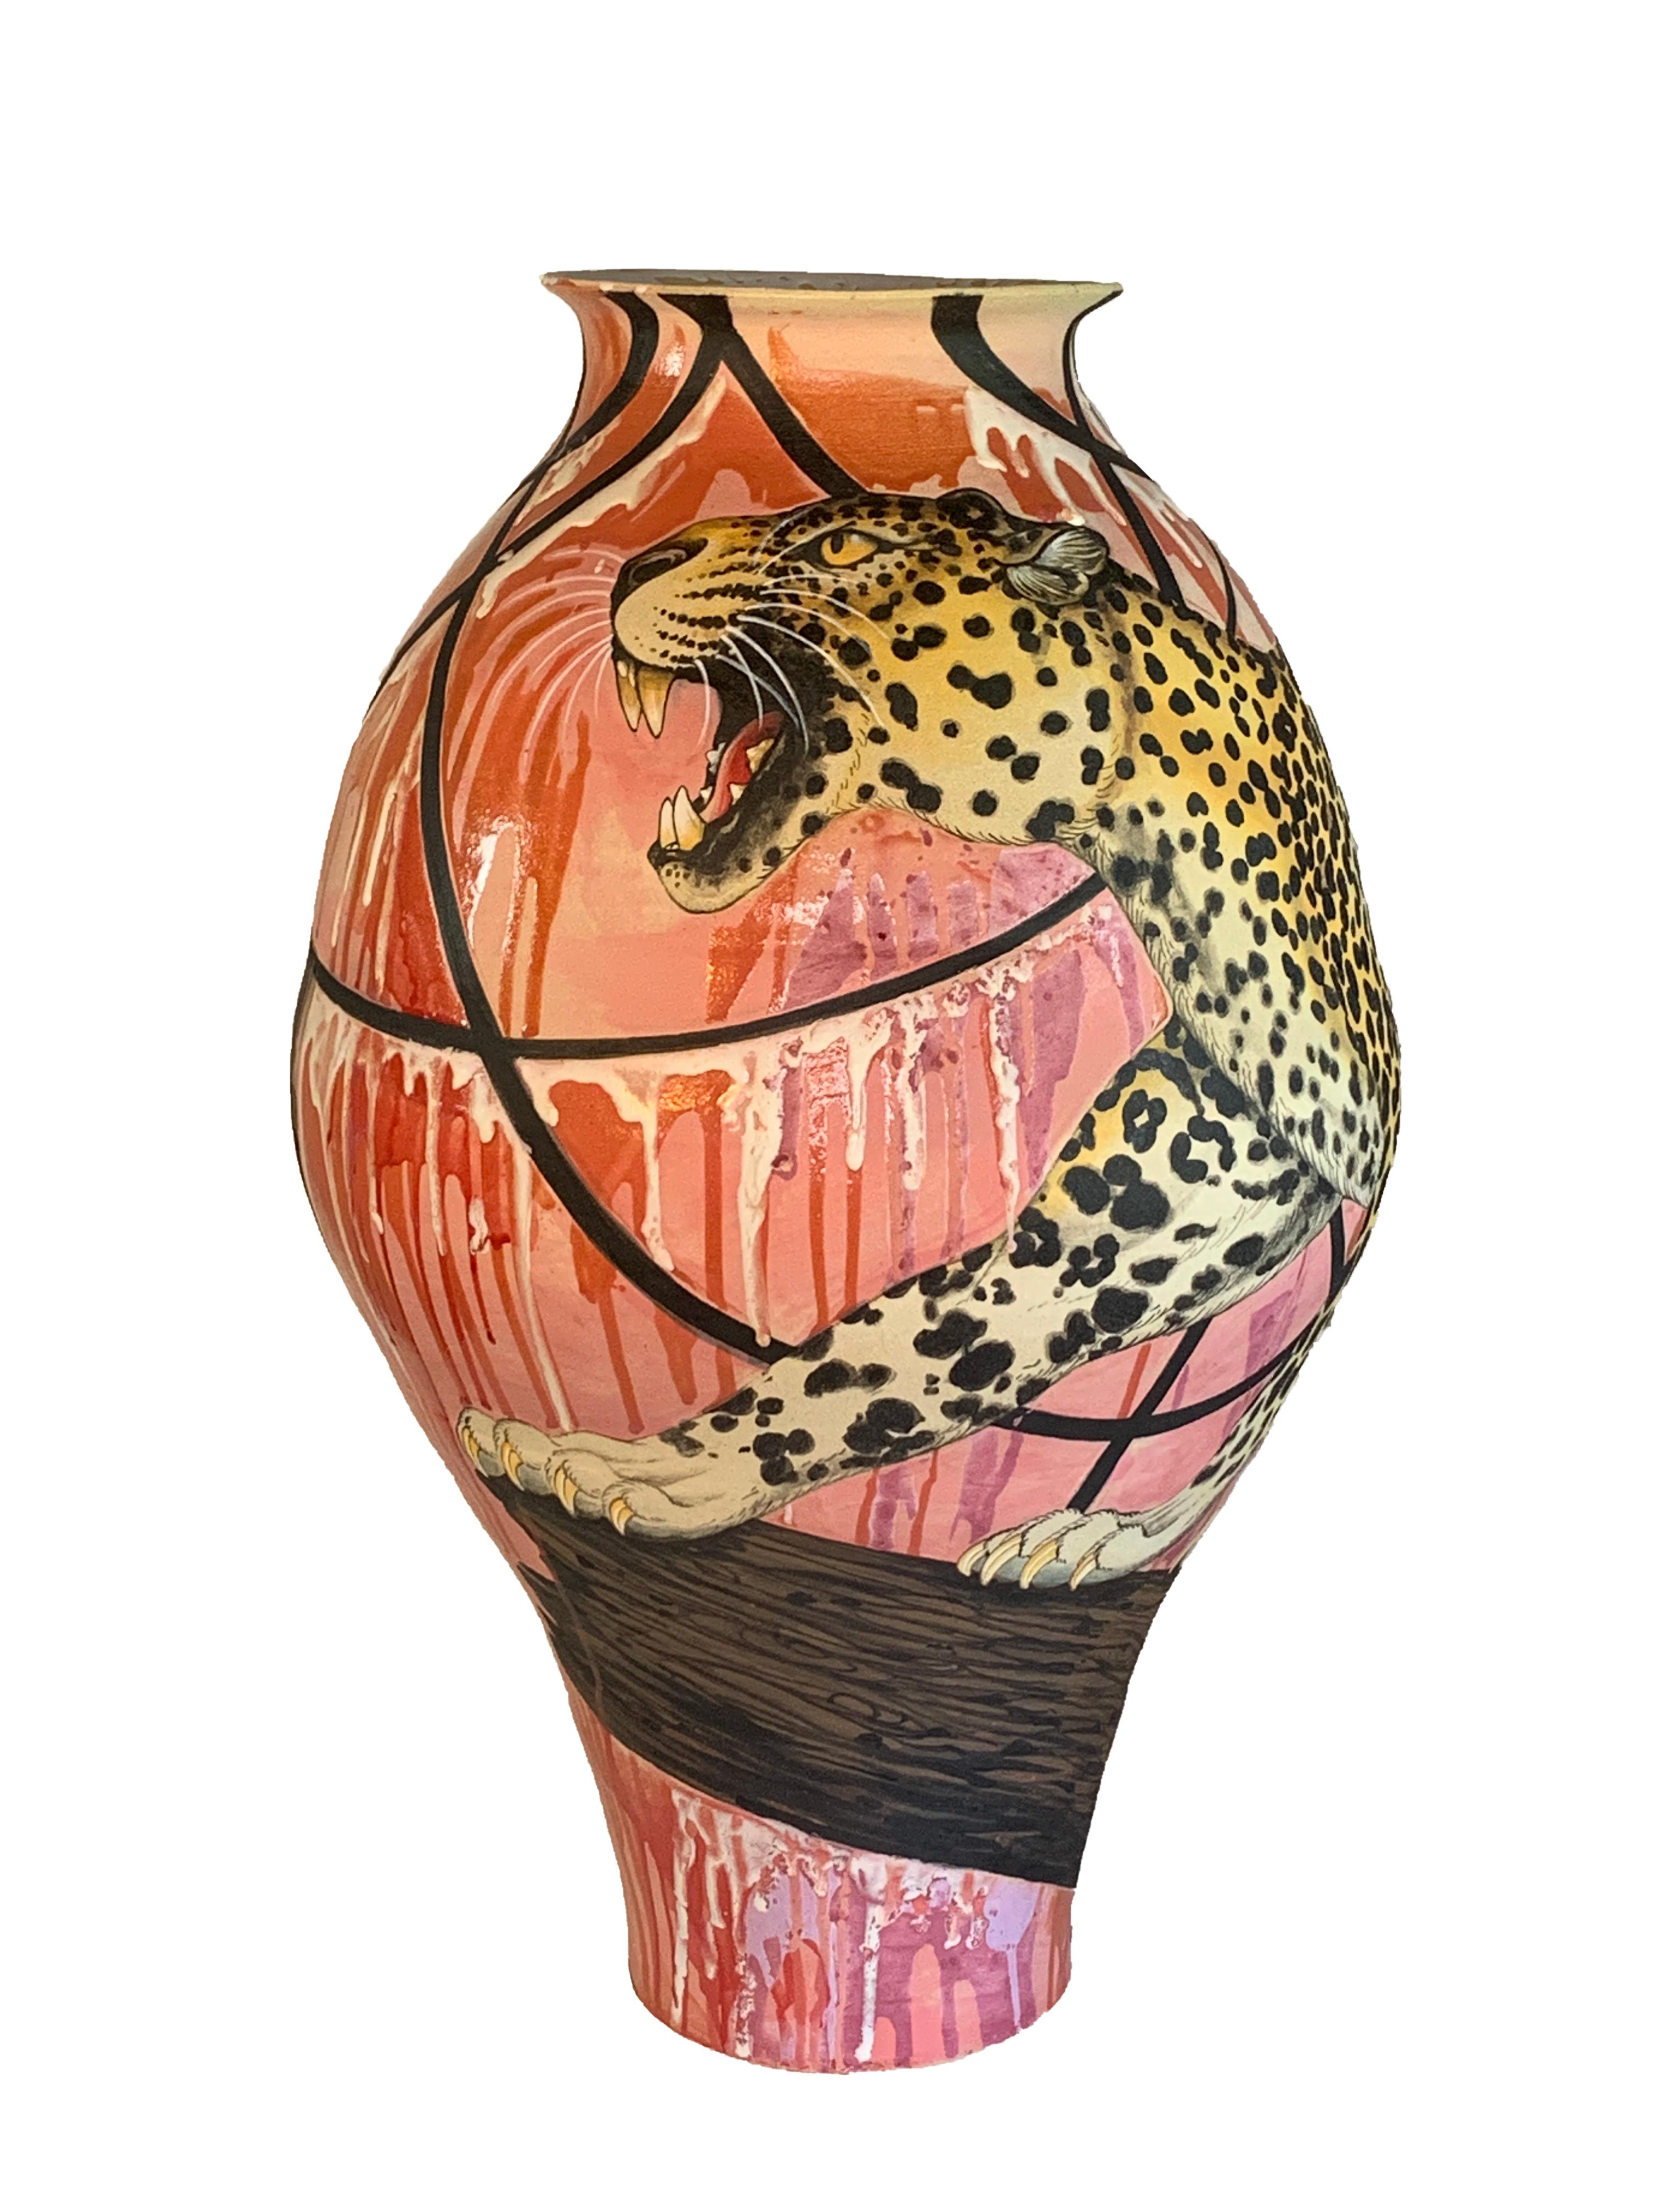 "Mr. Telephone Man", Ceramic Vase Form with Surface Illustration, Glaze, Animals - Sculpture by Bryan Burk